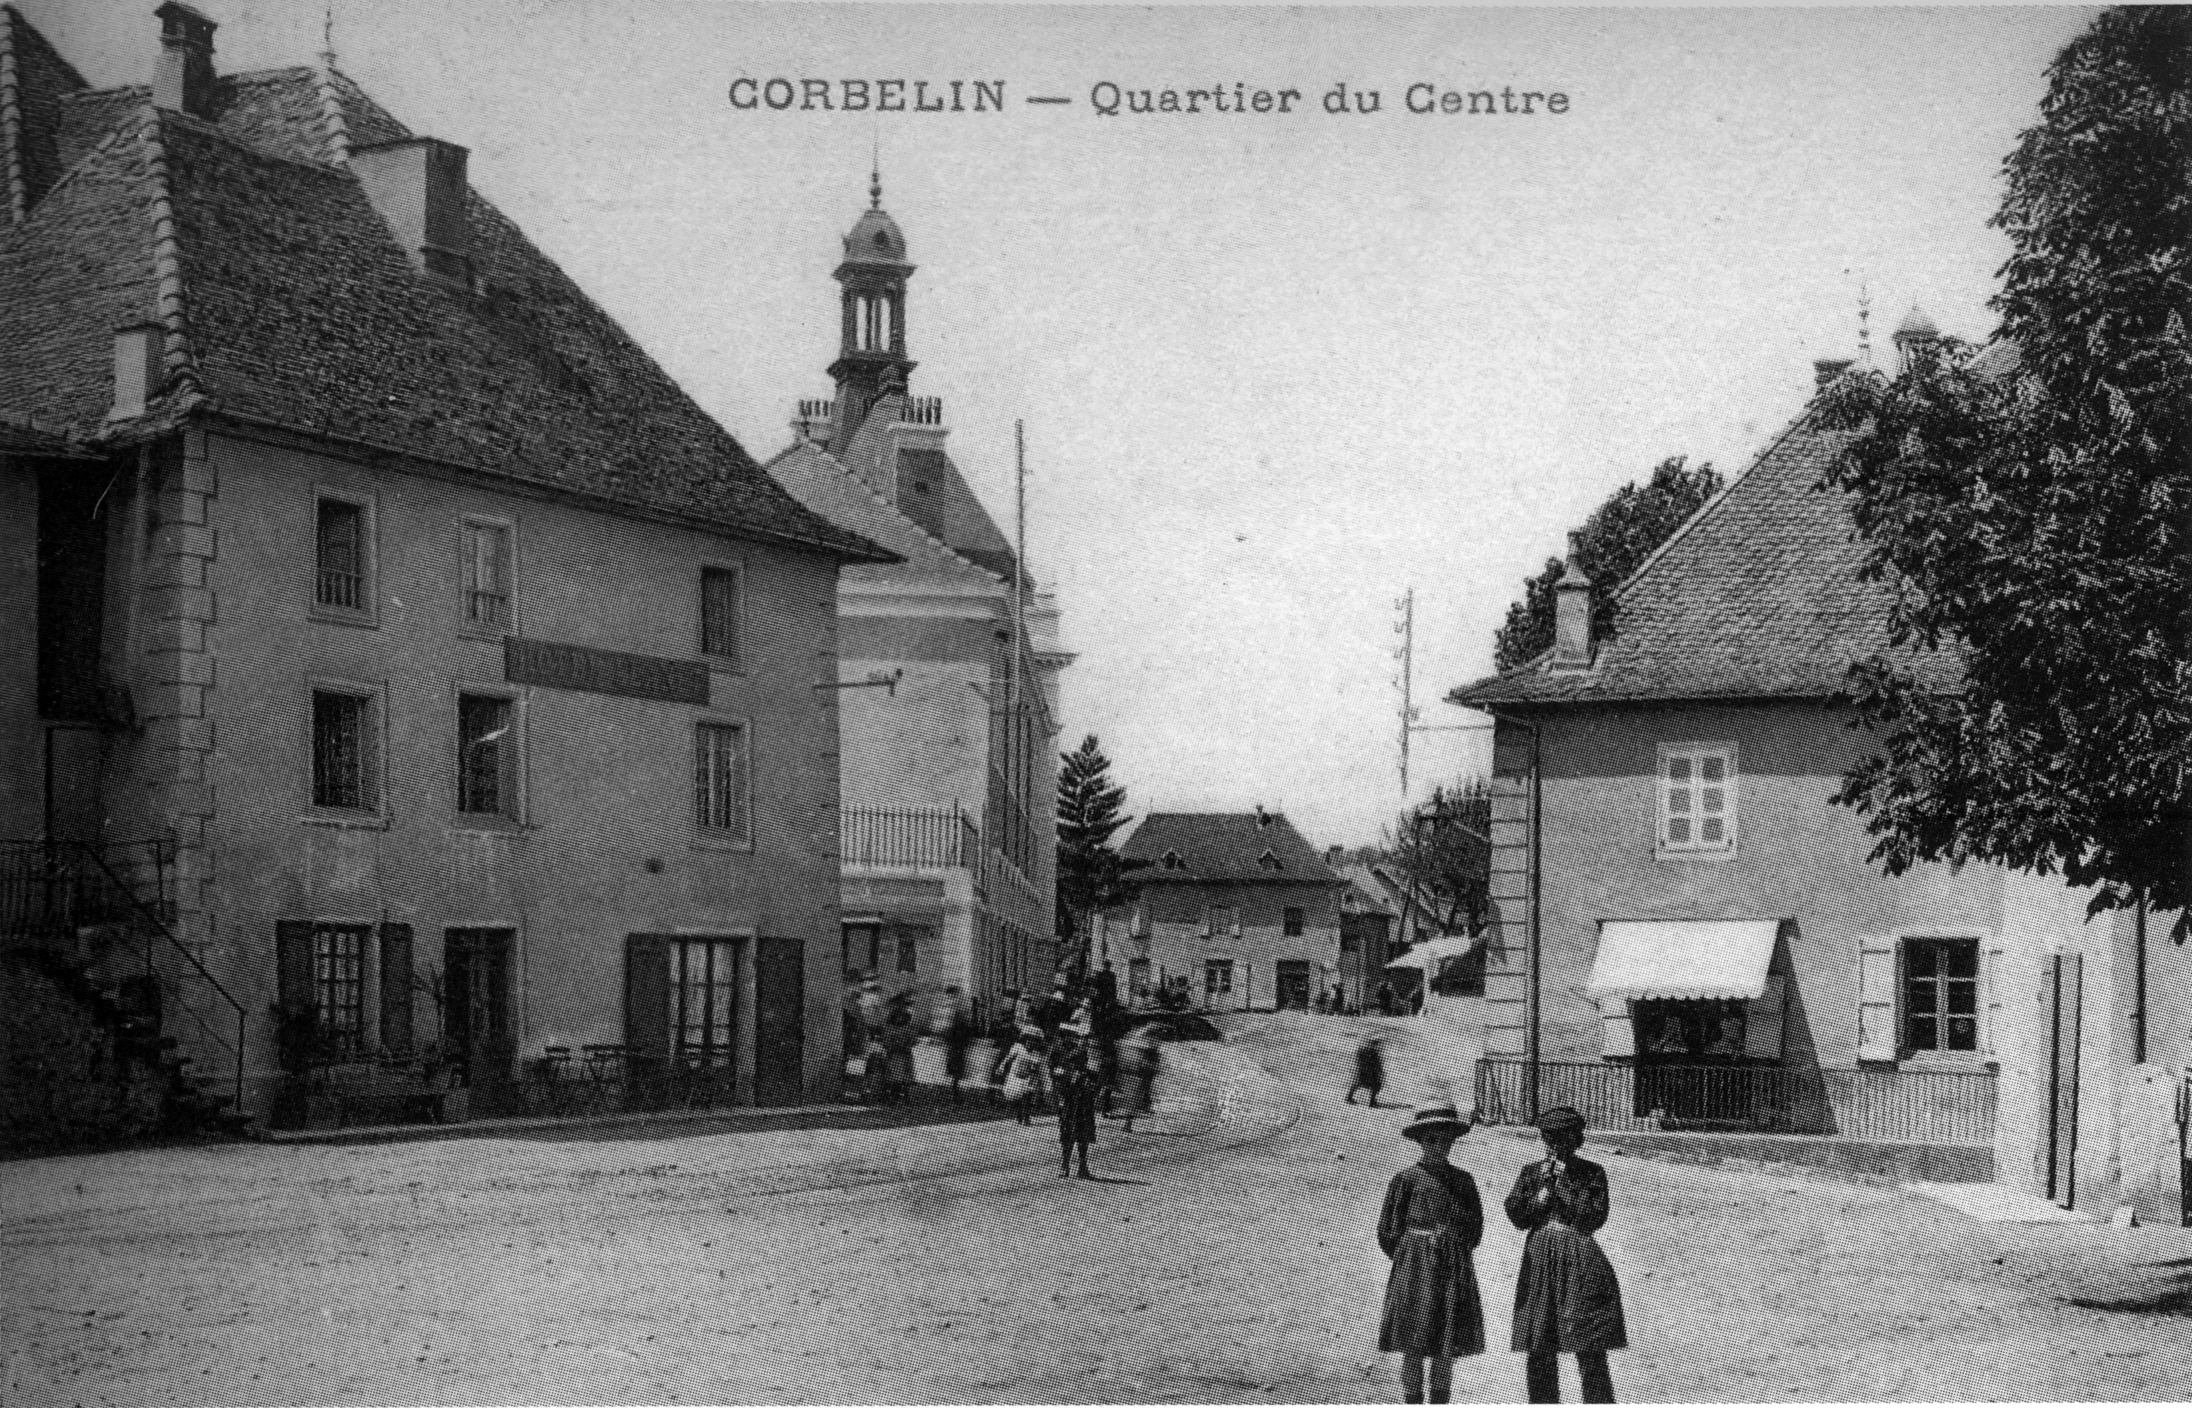 Corbelin